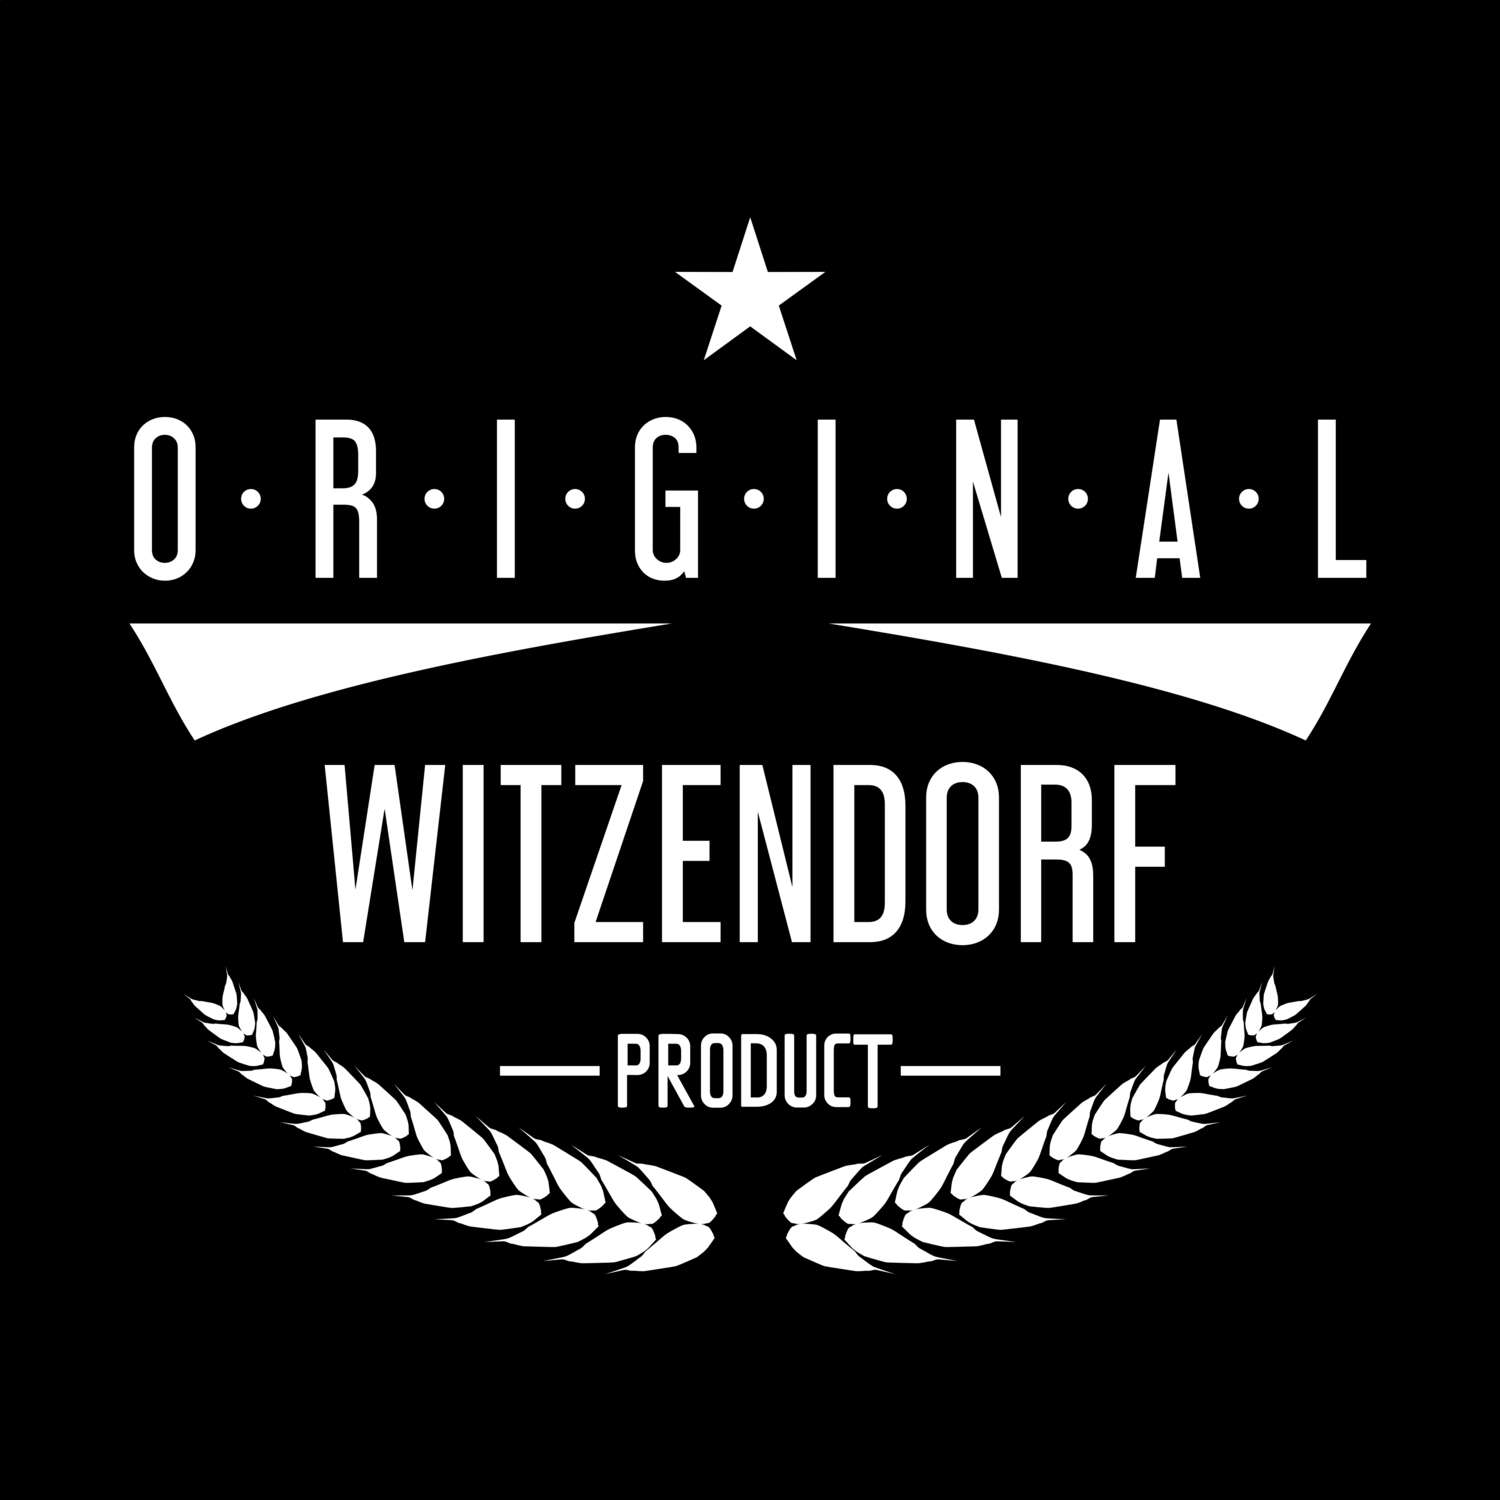 Witzendorf T-Shirt »Original Product«